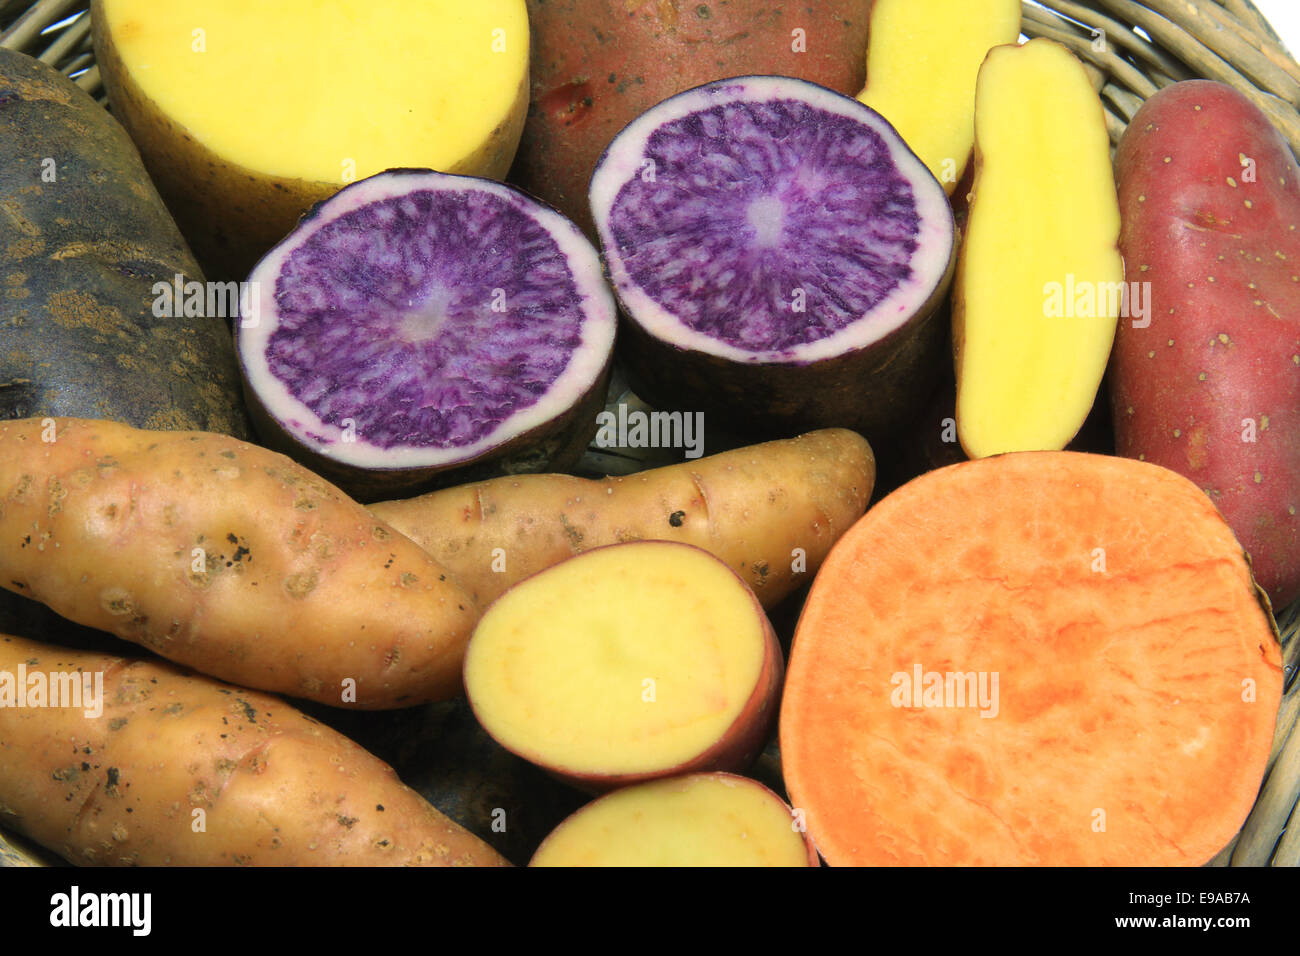 Potatoes and a sweet potato Stock Photo